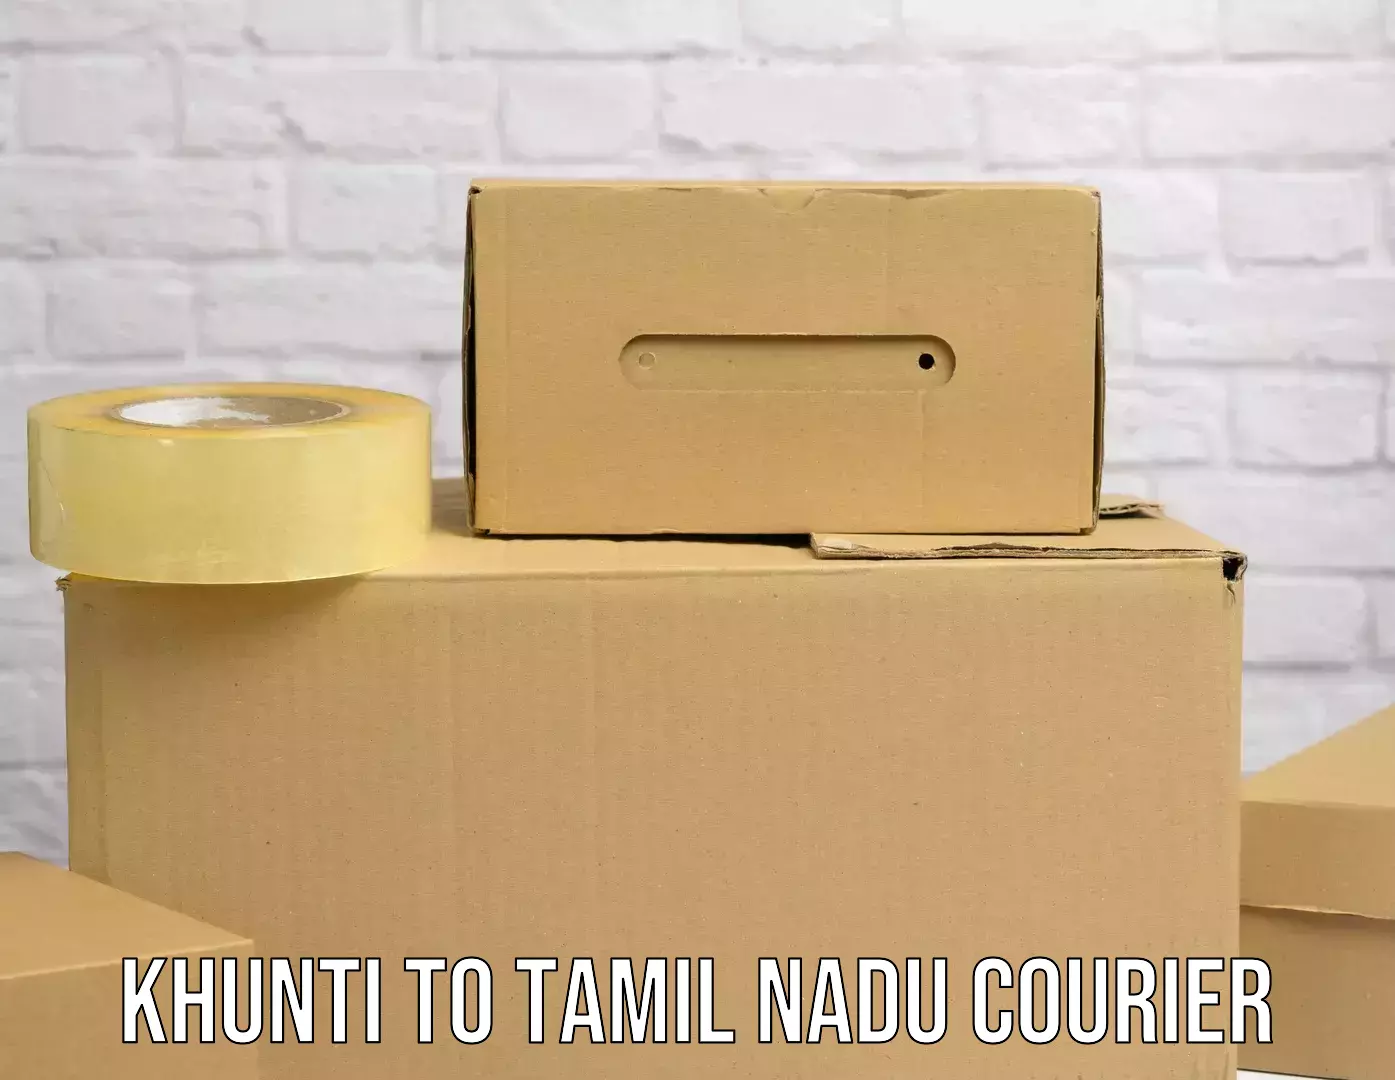 Reliable package handling Khunti to Thiruvadanai